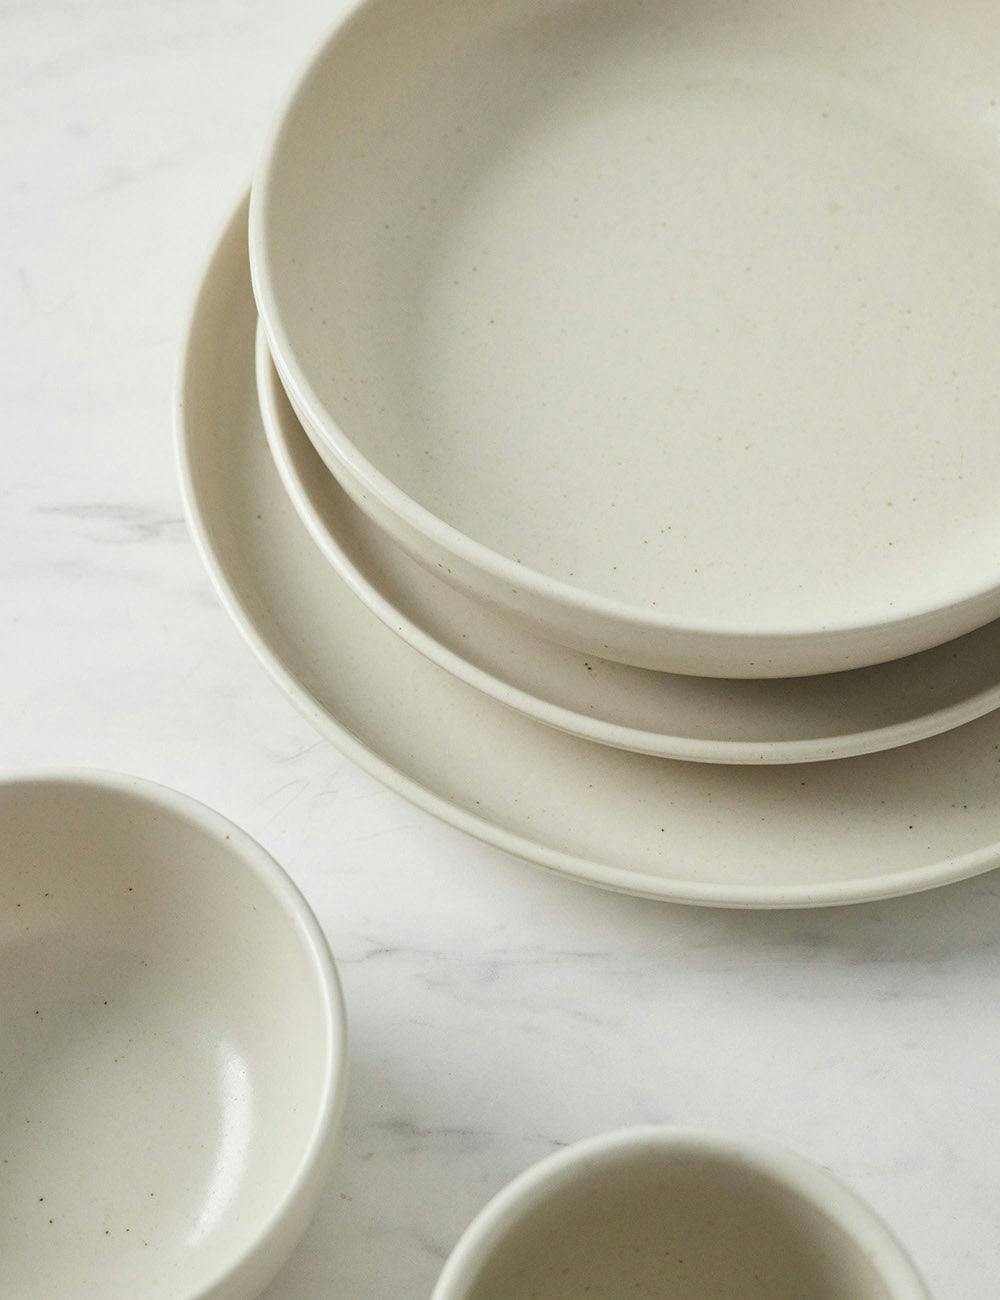 Pacifica Vanilla White 5-Piece Stoneware Dinnerware Set